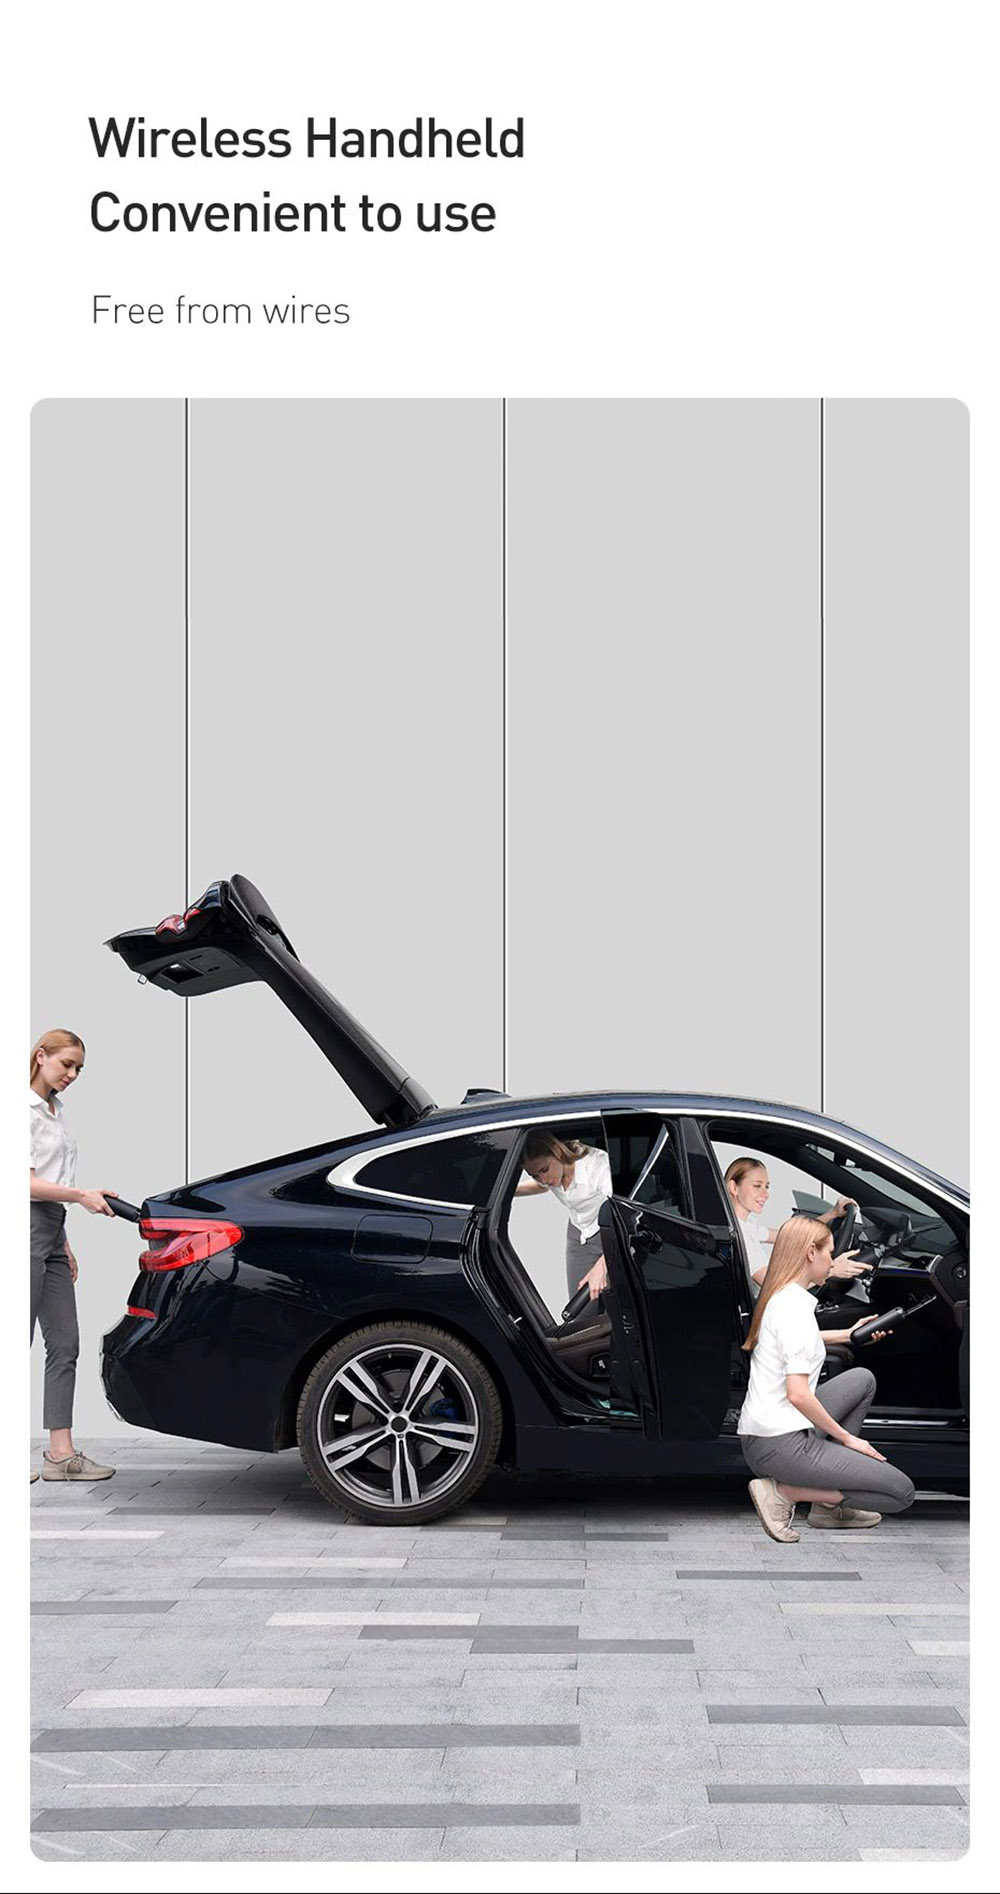 Aspiradora de coche Baseus Mini aspiradora de mano inalámbrica 5000Pa para limpieza de escritorio del hogar del coche Aspiradora portátil - Negro